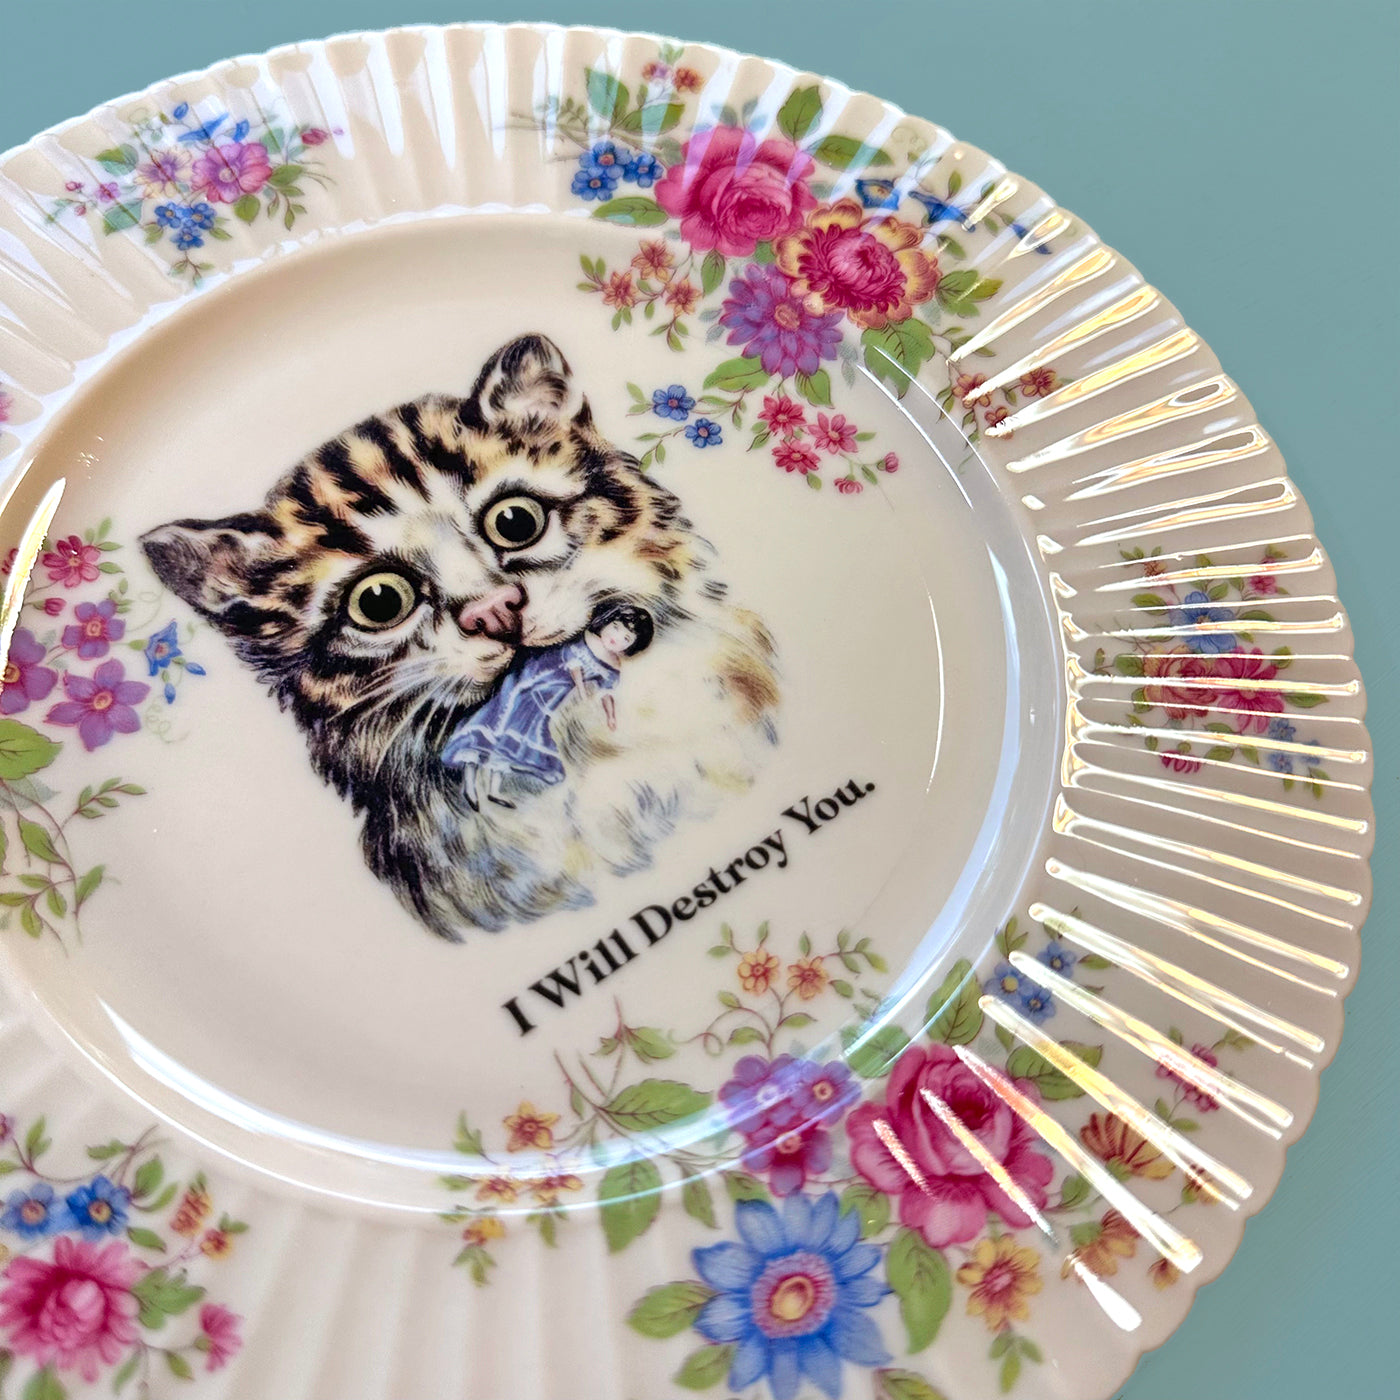 Vintage Art  Plate - Cat Art Plate - "I will Destroy You."